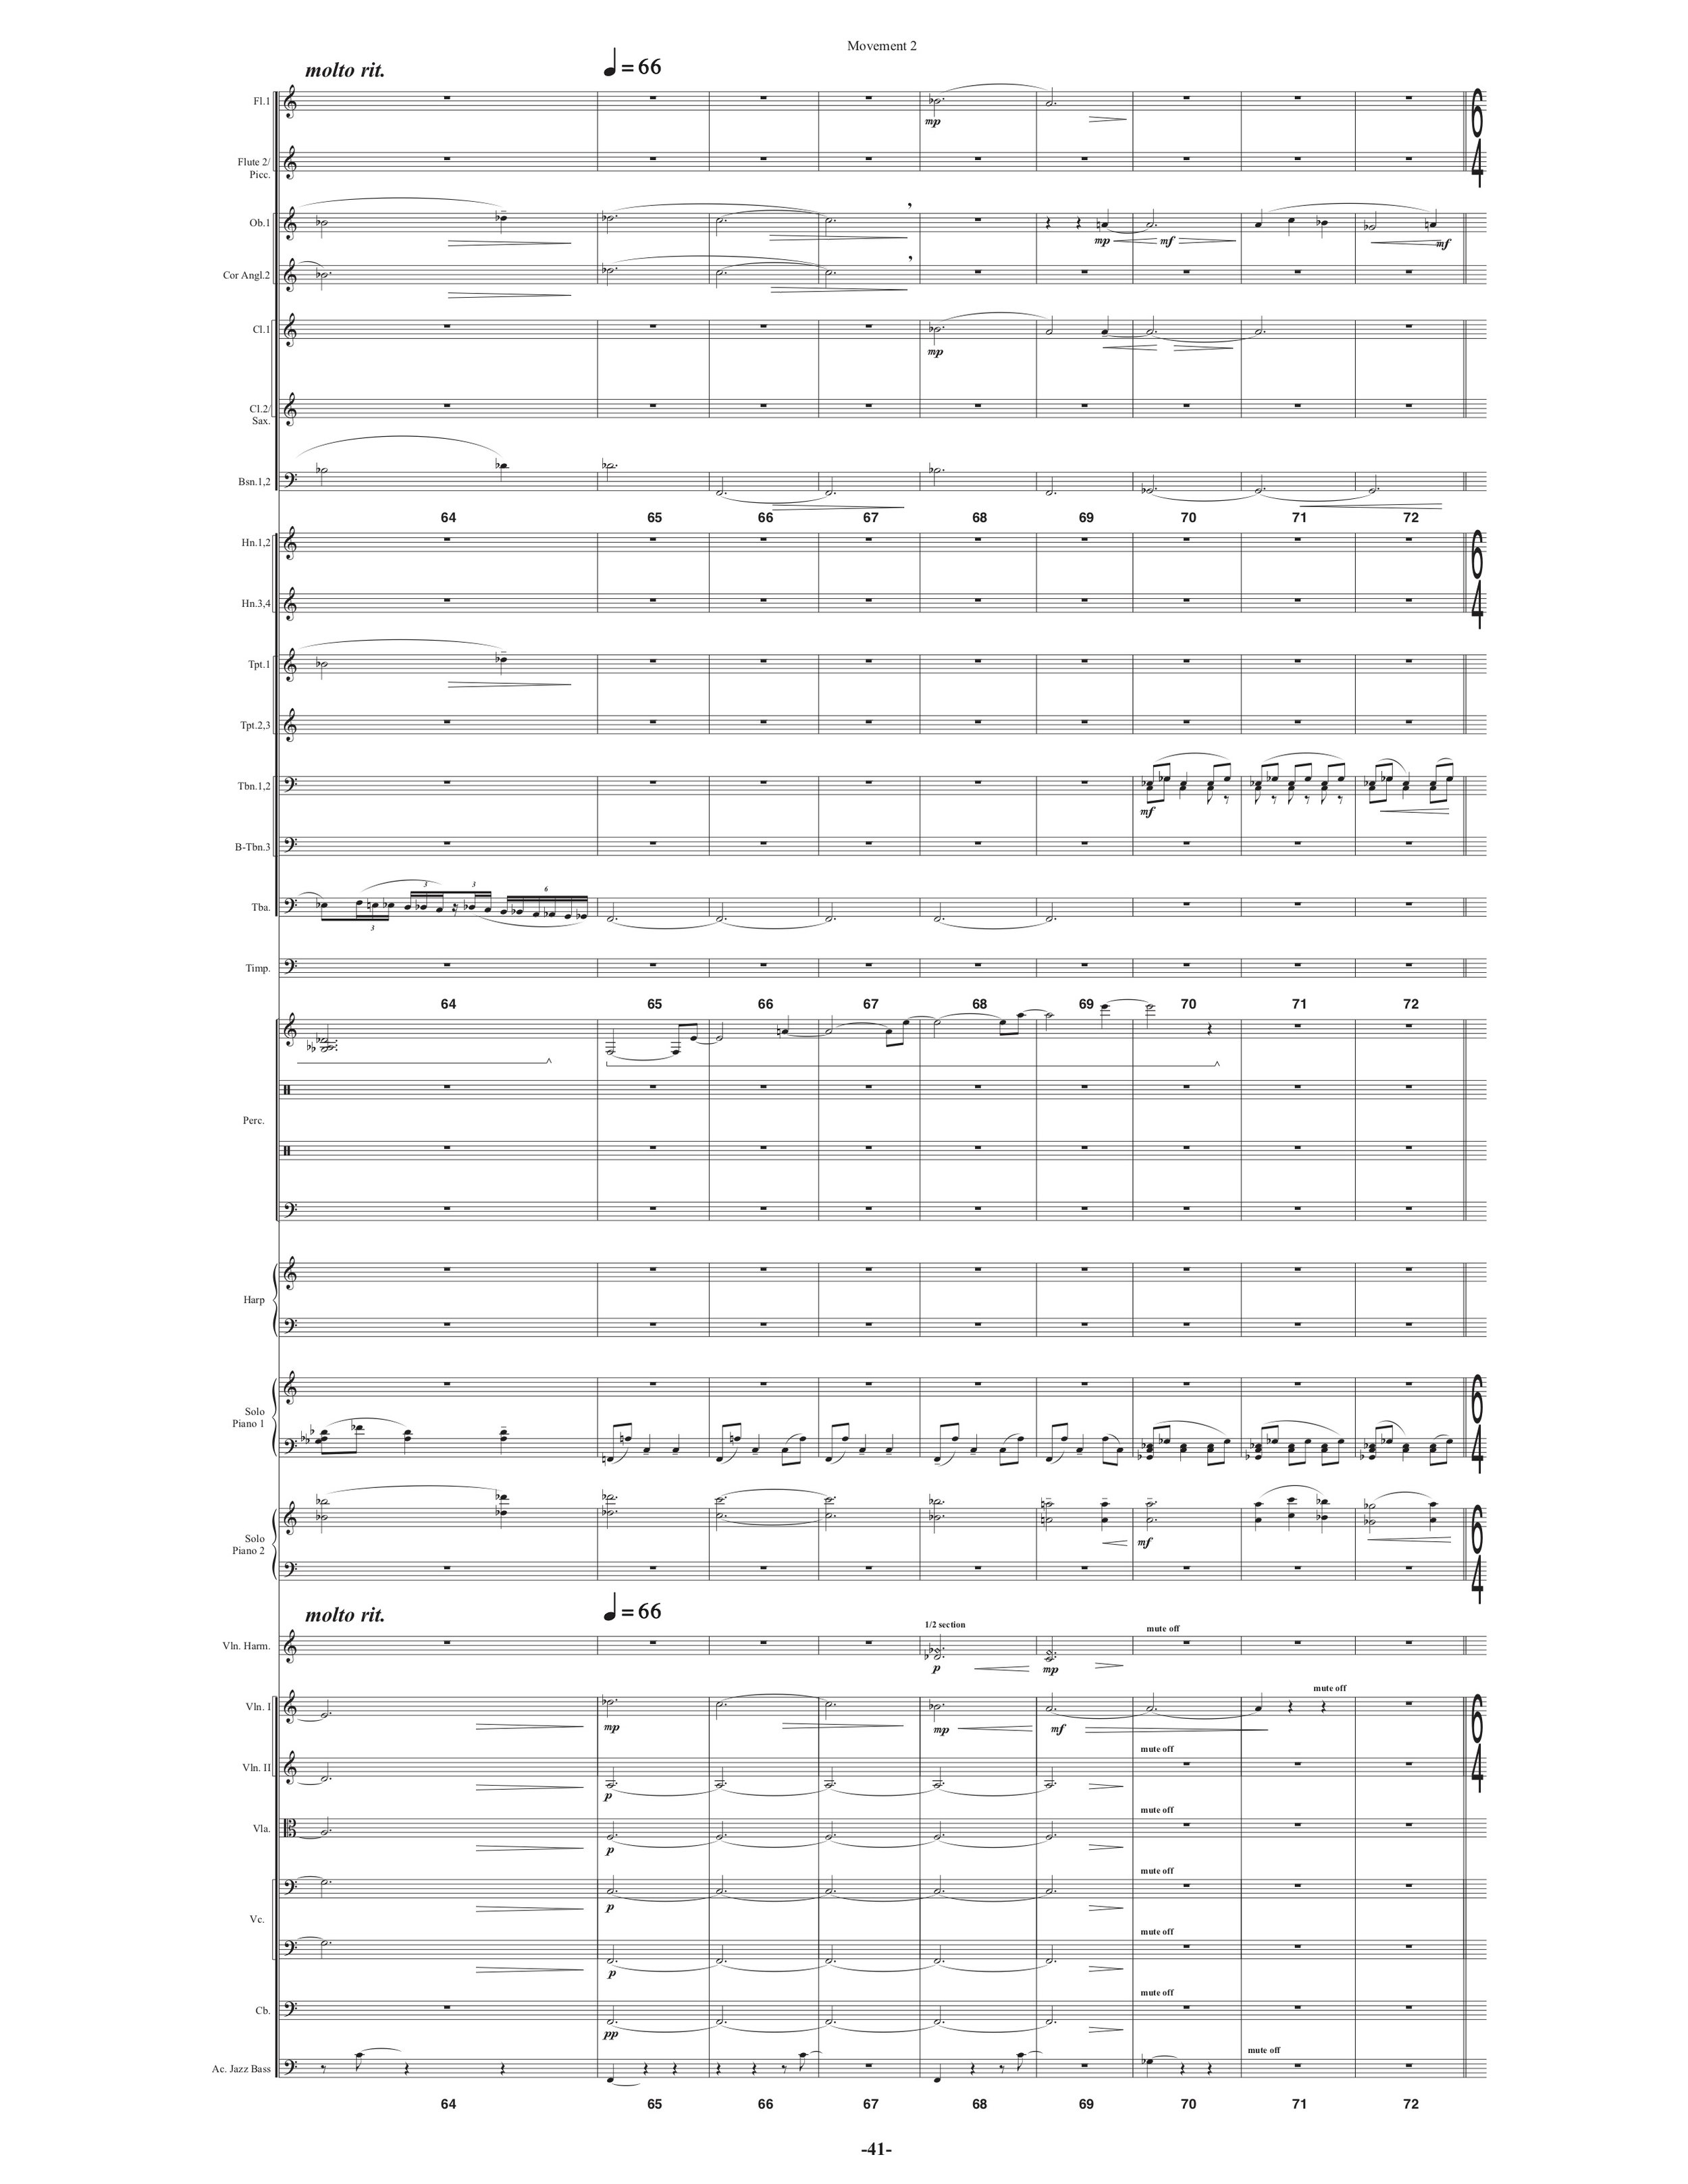 Symphony_Orch & 2 Pianos p46.jpg